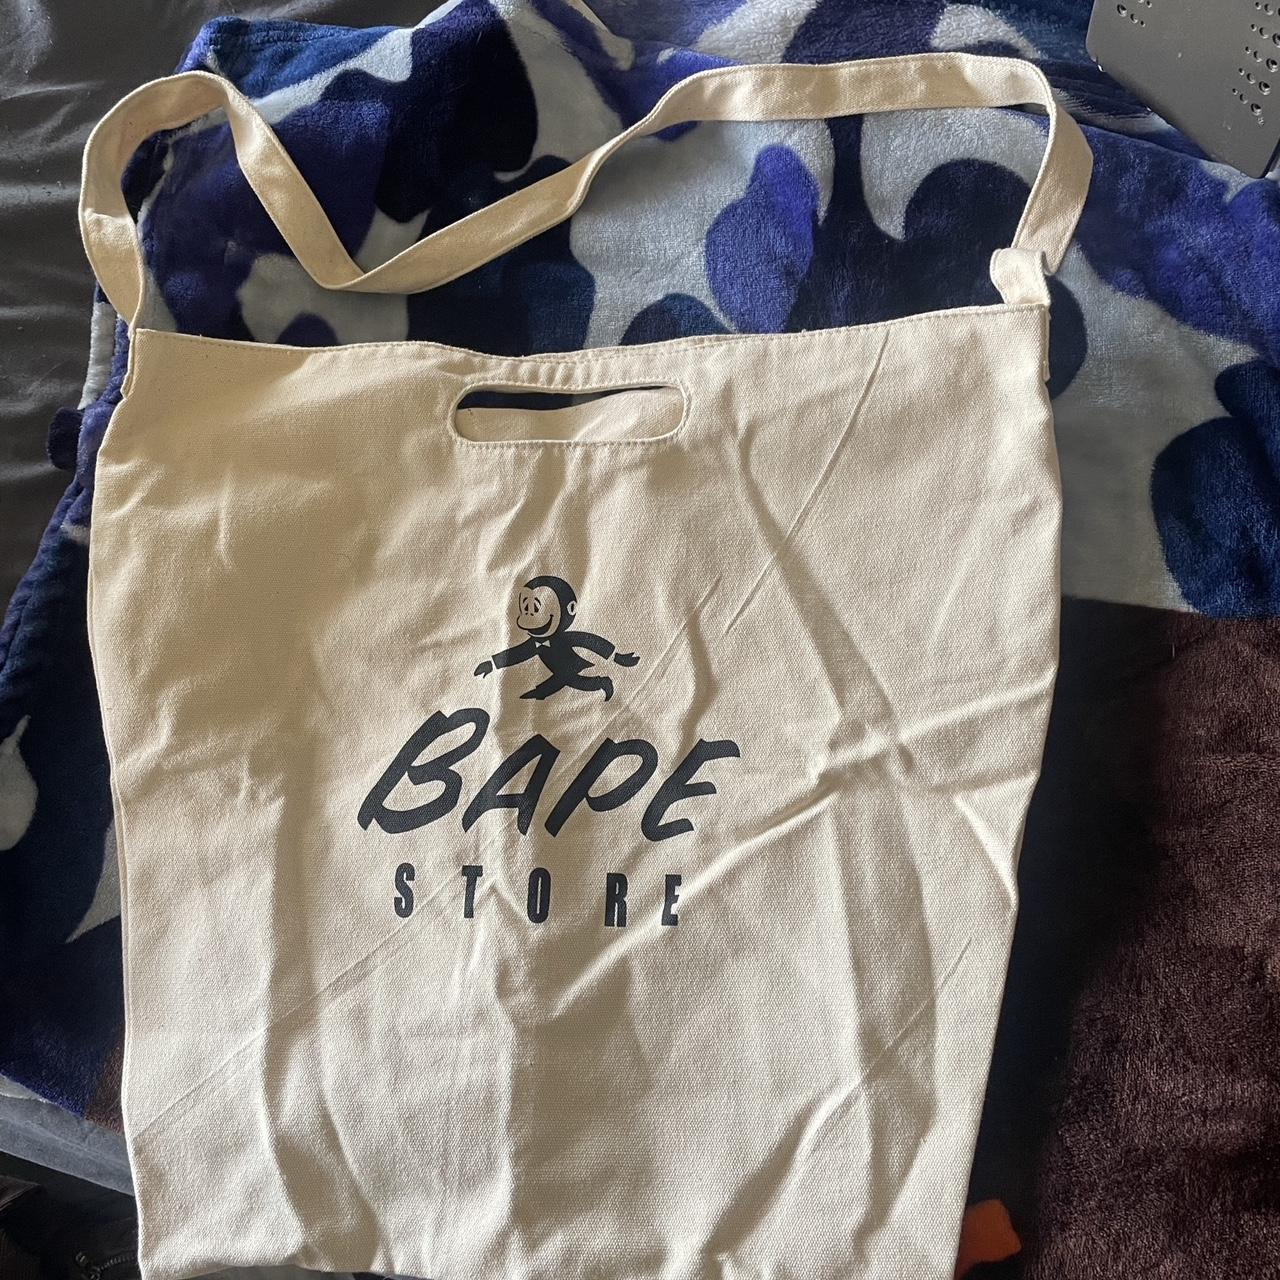 Bape Tote Bag 